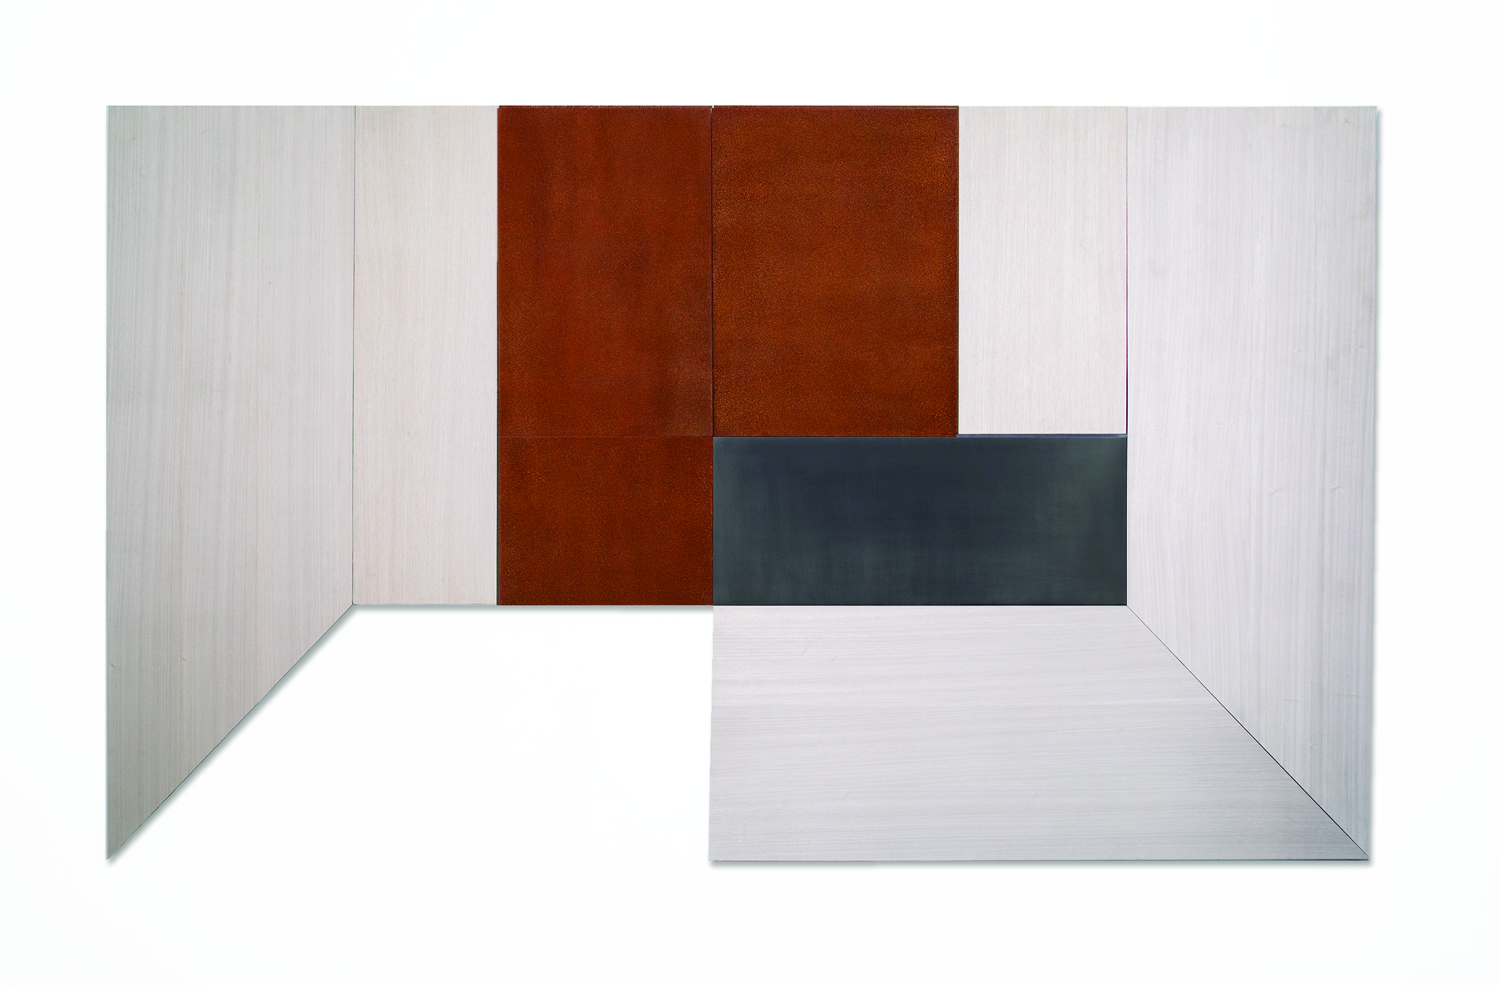  White Room III, 2018  Egyptian Wood Laminate, Linen and Lead on Wood  65” x 94”    Cuarto  Blanco lll, 2018  Chapa Egipcia s/mdf, Acero Oxidado y Plomo sobre Aluminio  165 cm x 238 cm 